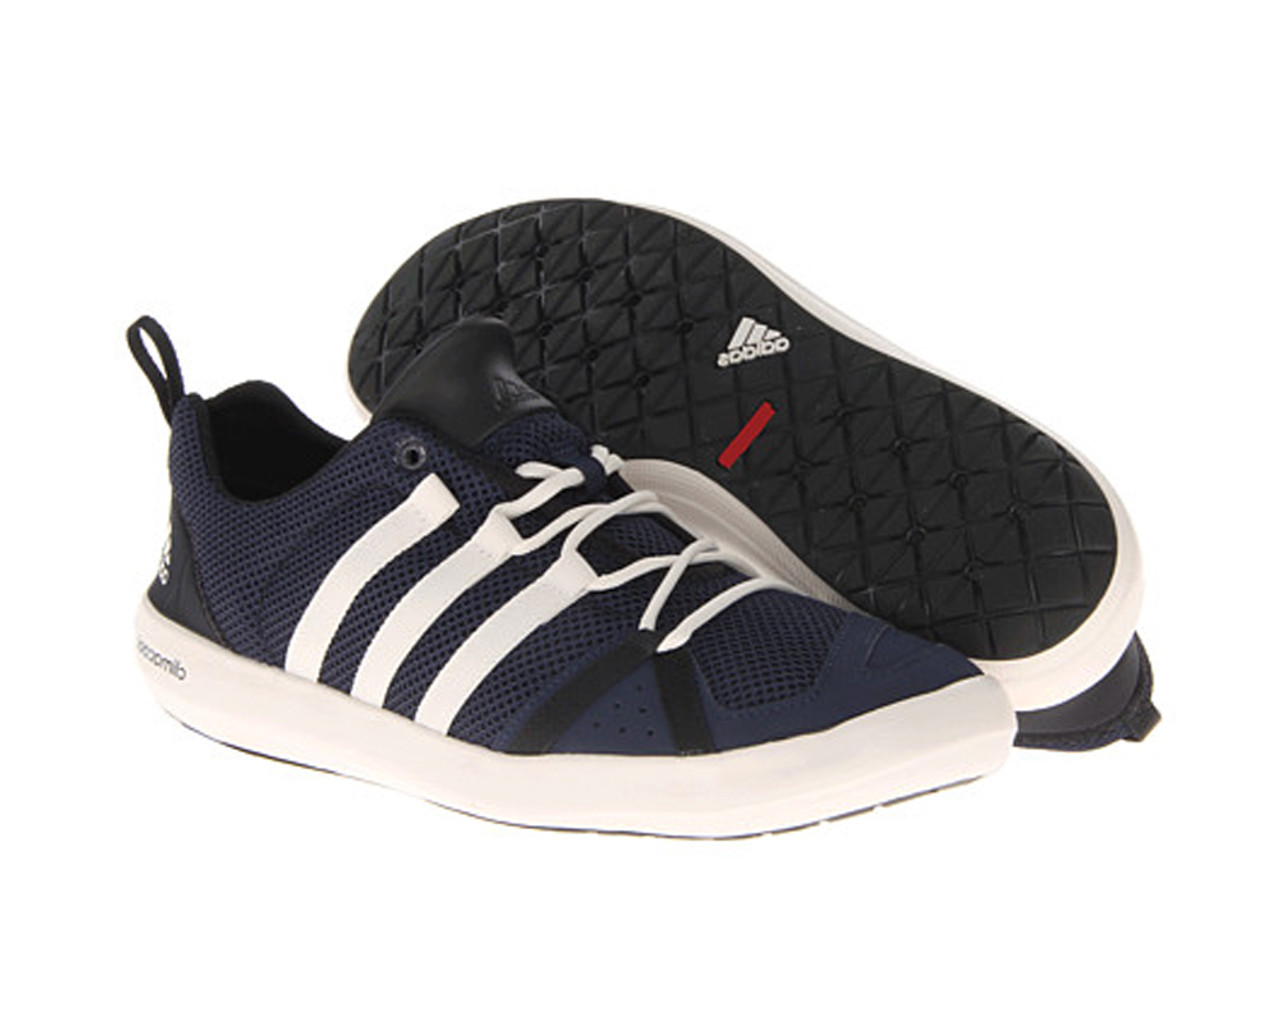 Adidas Men's Climacool Boat Lace Sneaker - Blue | Discount Adidas Men's  Athletic Shoes & More - Shoolu.com | Shoolu.com